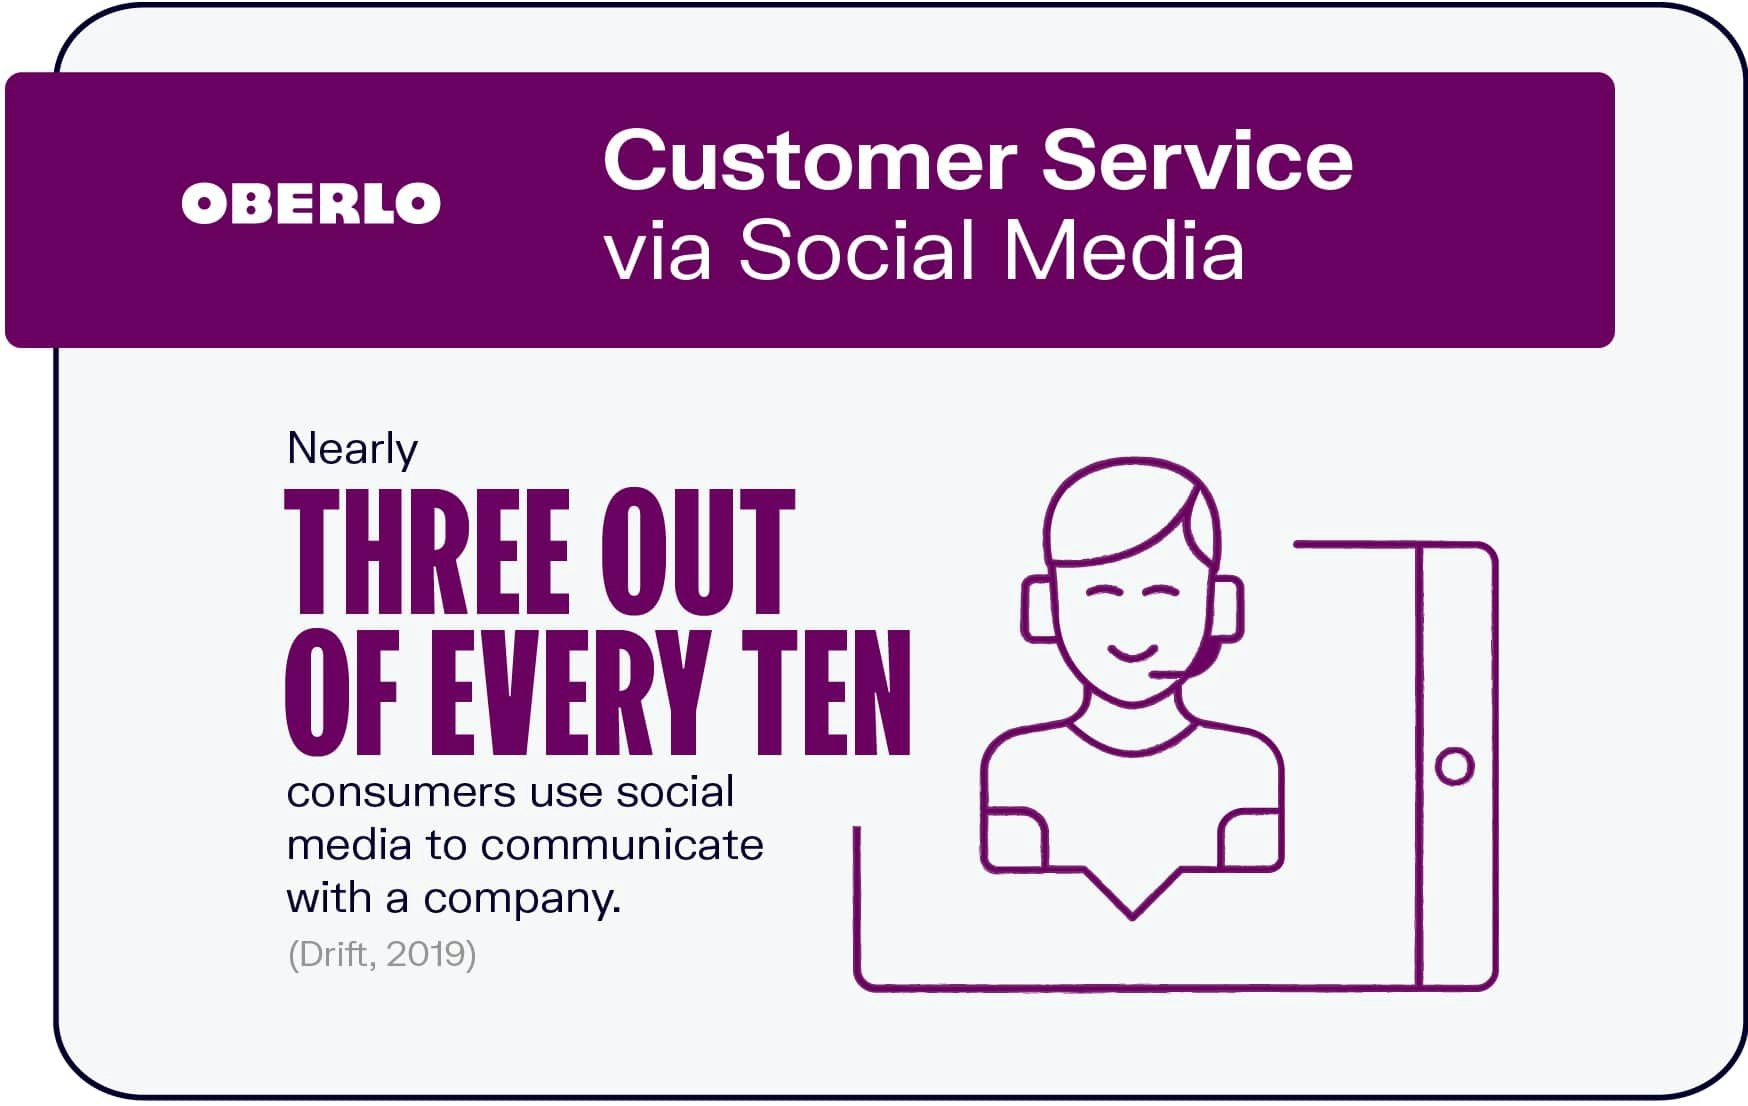  Customer Service through Social Media